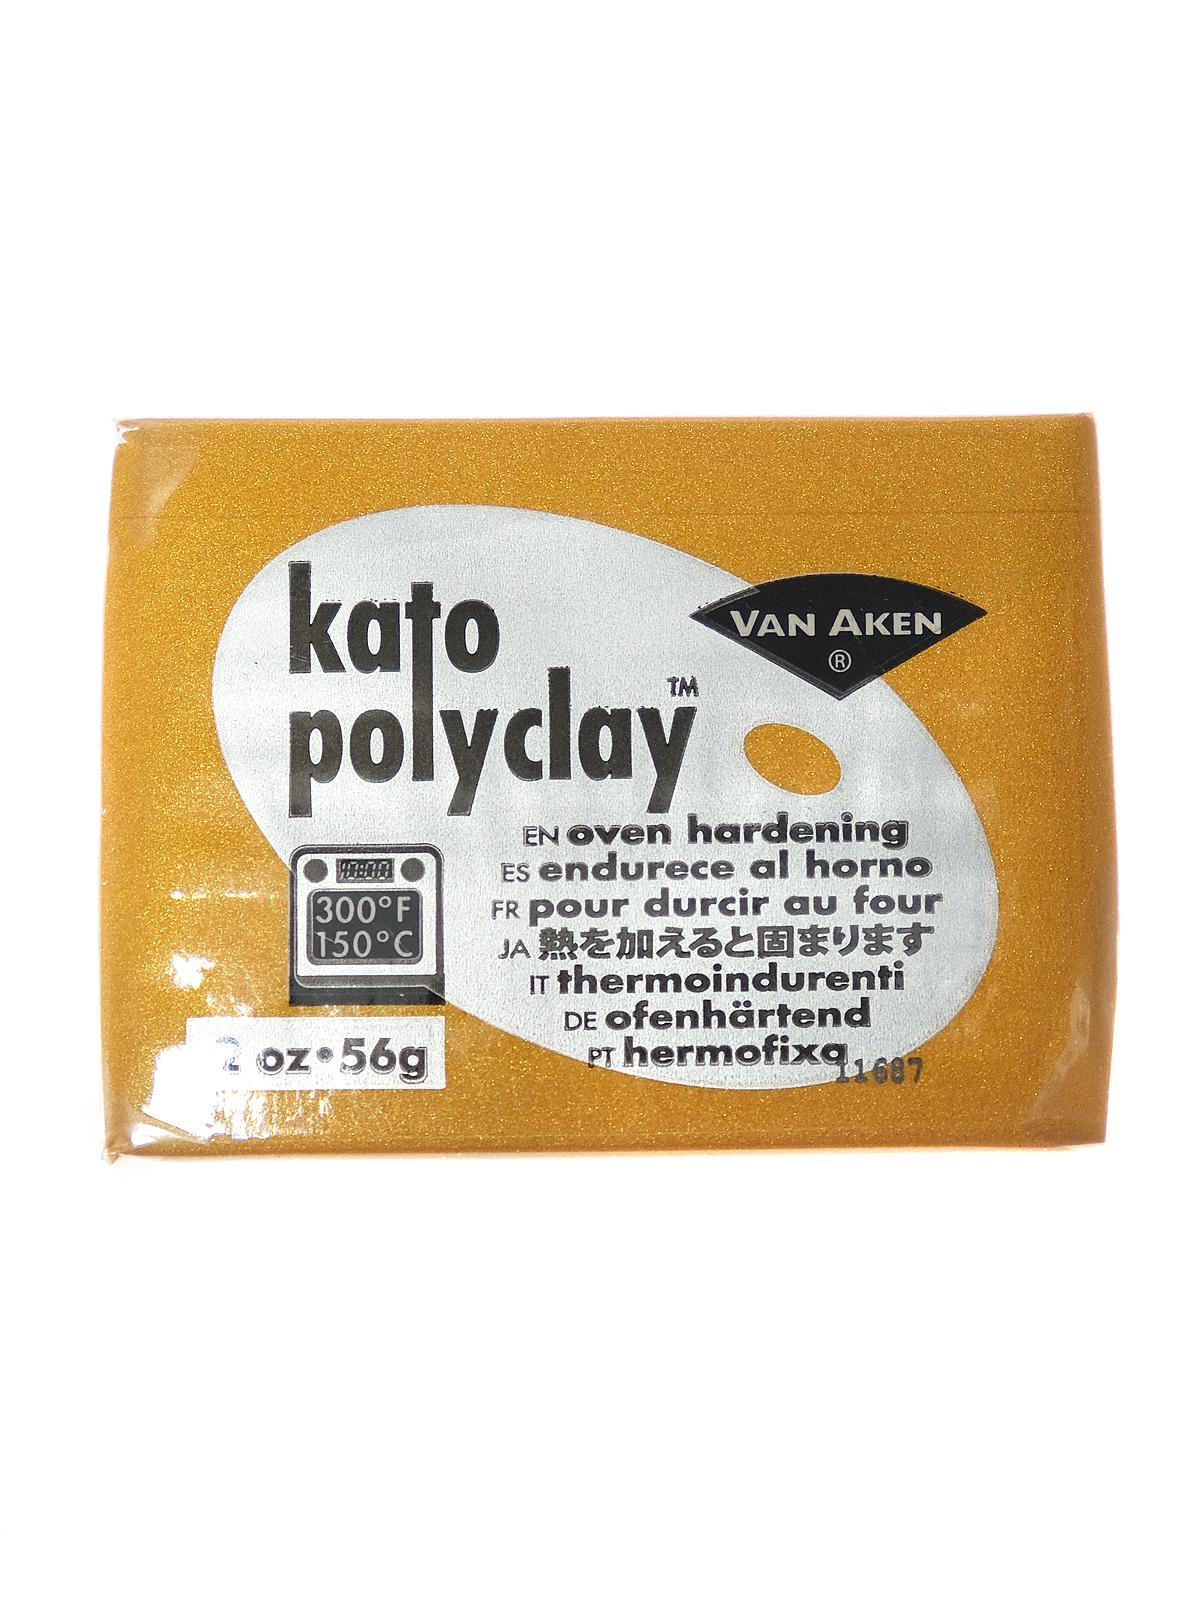 Kato Polyclay Gold 2 Oz.